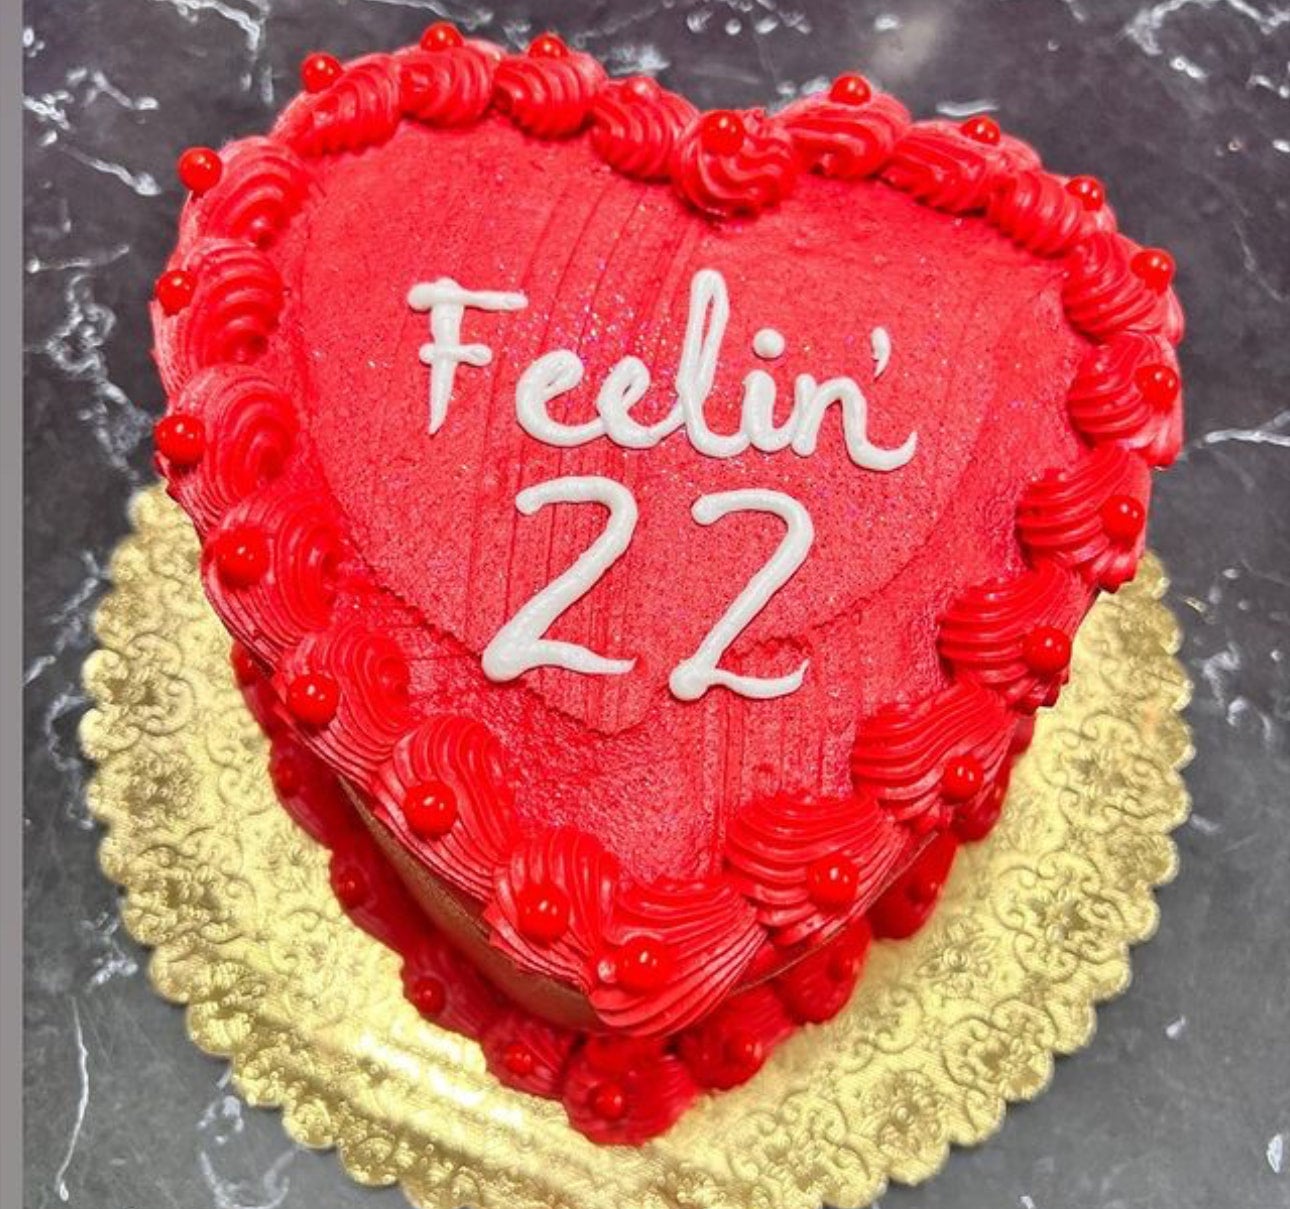 Darling star themed cake | Themed cakes, Cake, Happy birthday